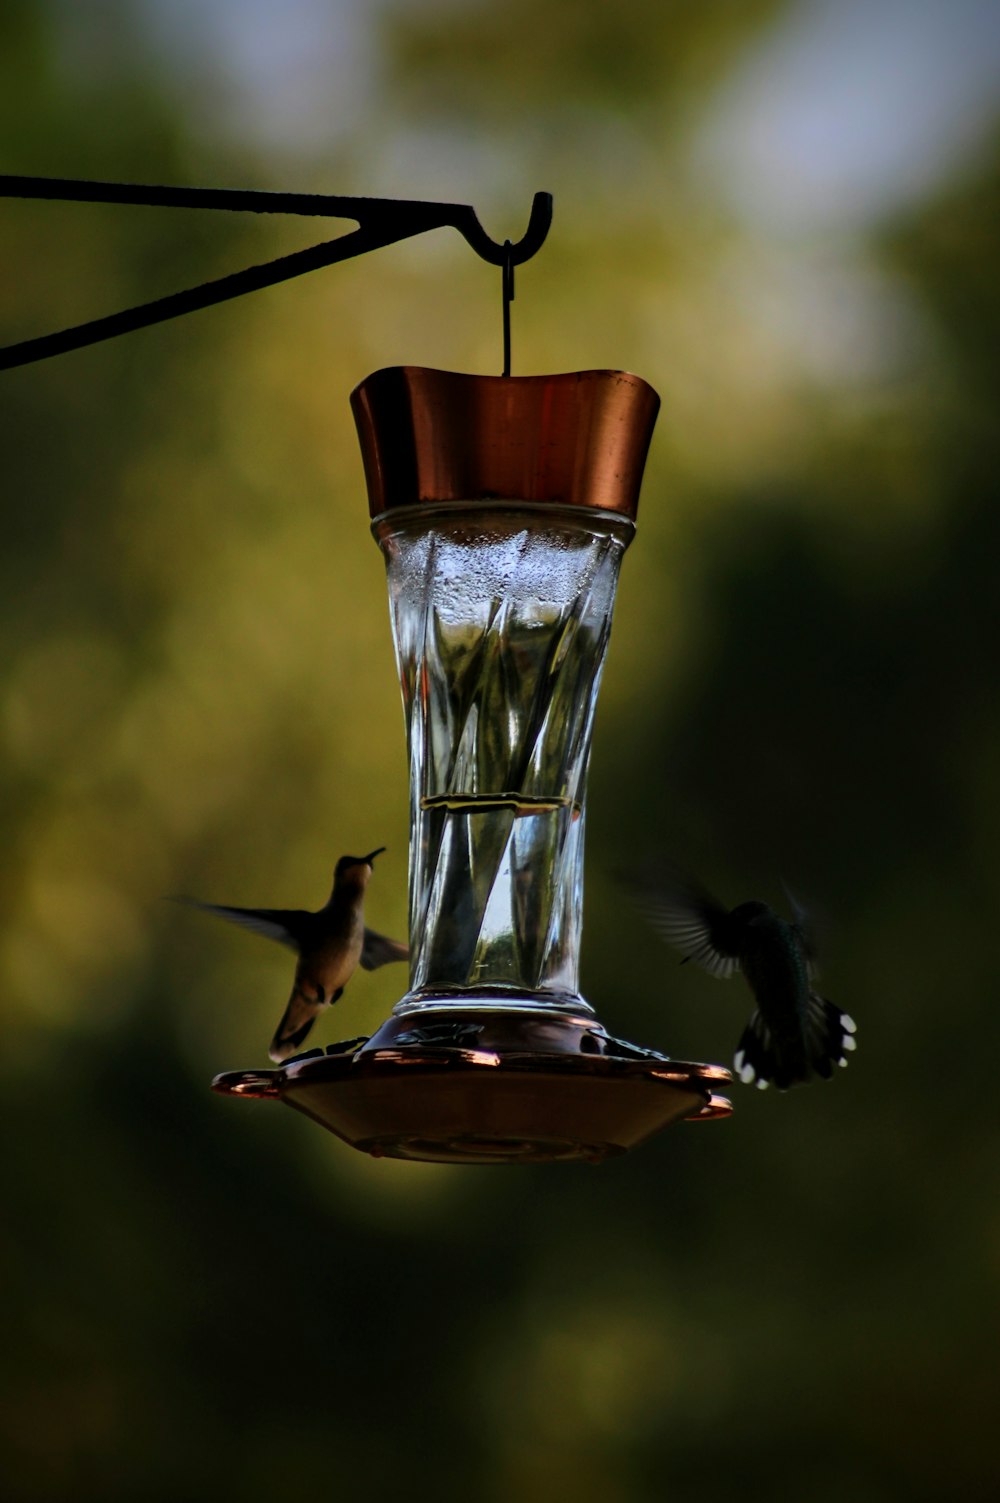 a hummingbird is drinking from a hummingbird feeder